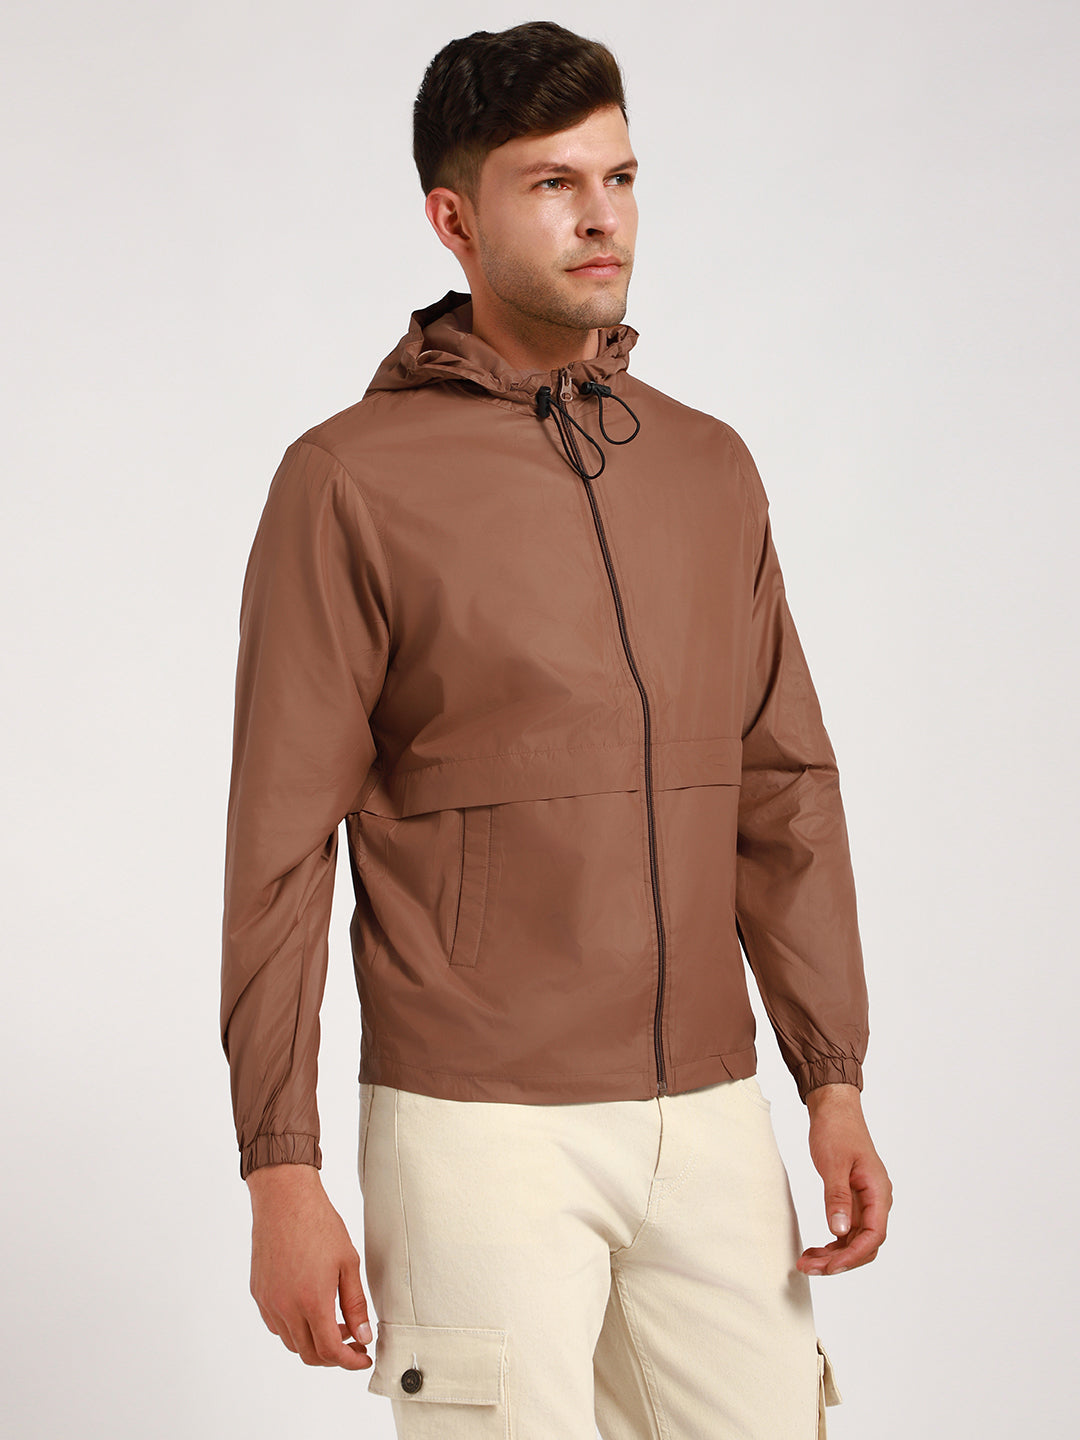 Dennis Lingo Men's Mousse Solid Hood Full Sleeve Light weight jacket Jackets